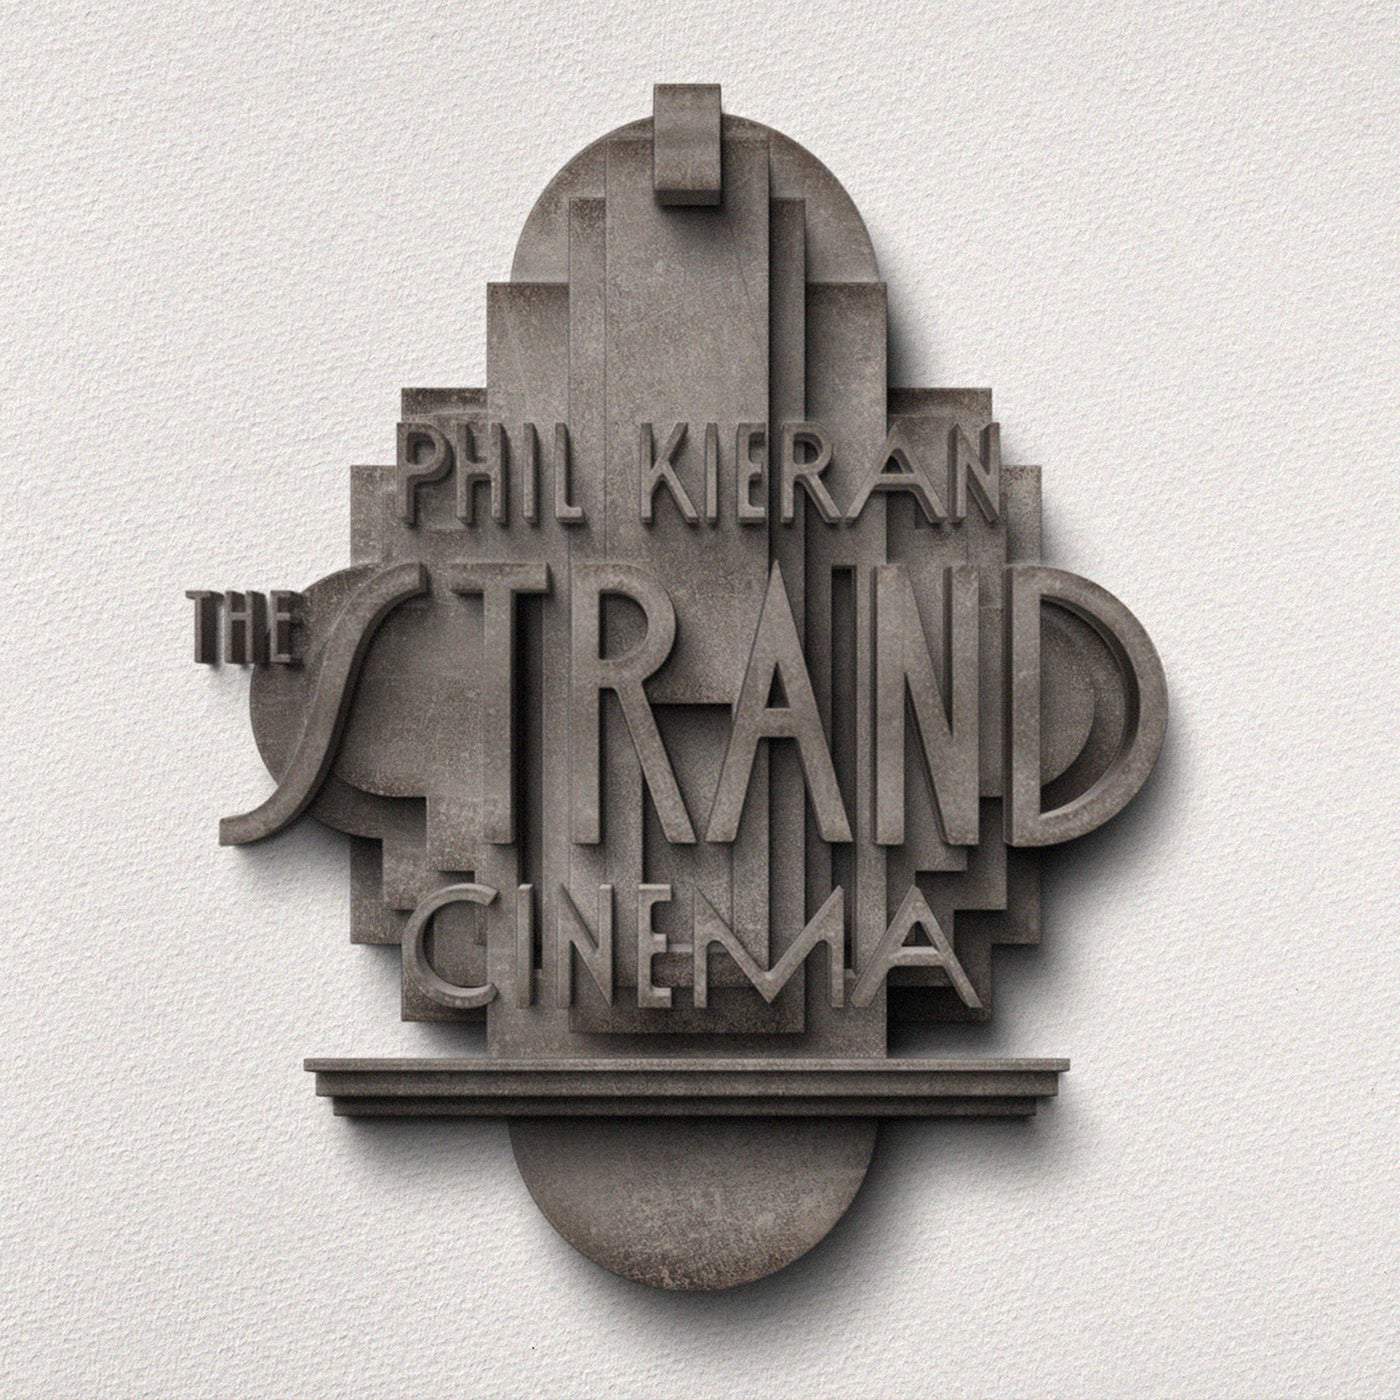 Download Phil Kieran - The Strand Cinema on Electrobuzz